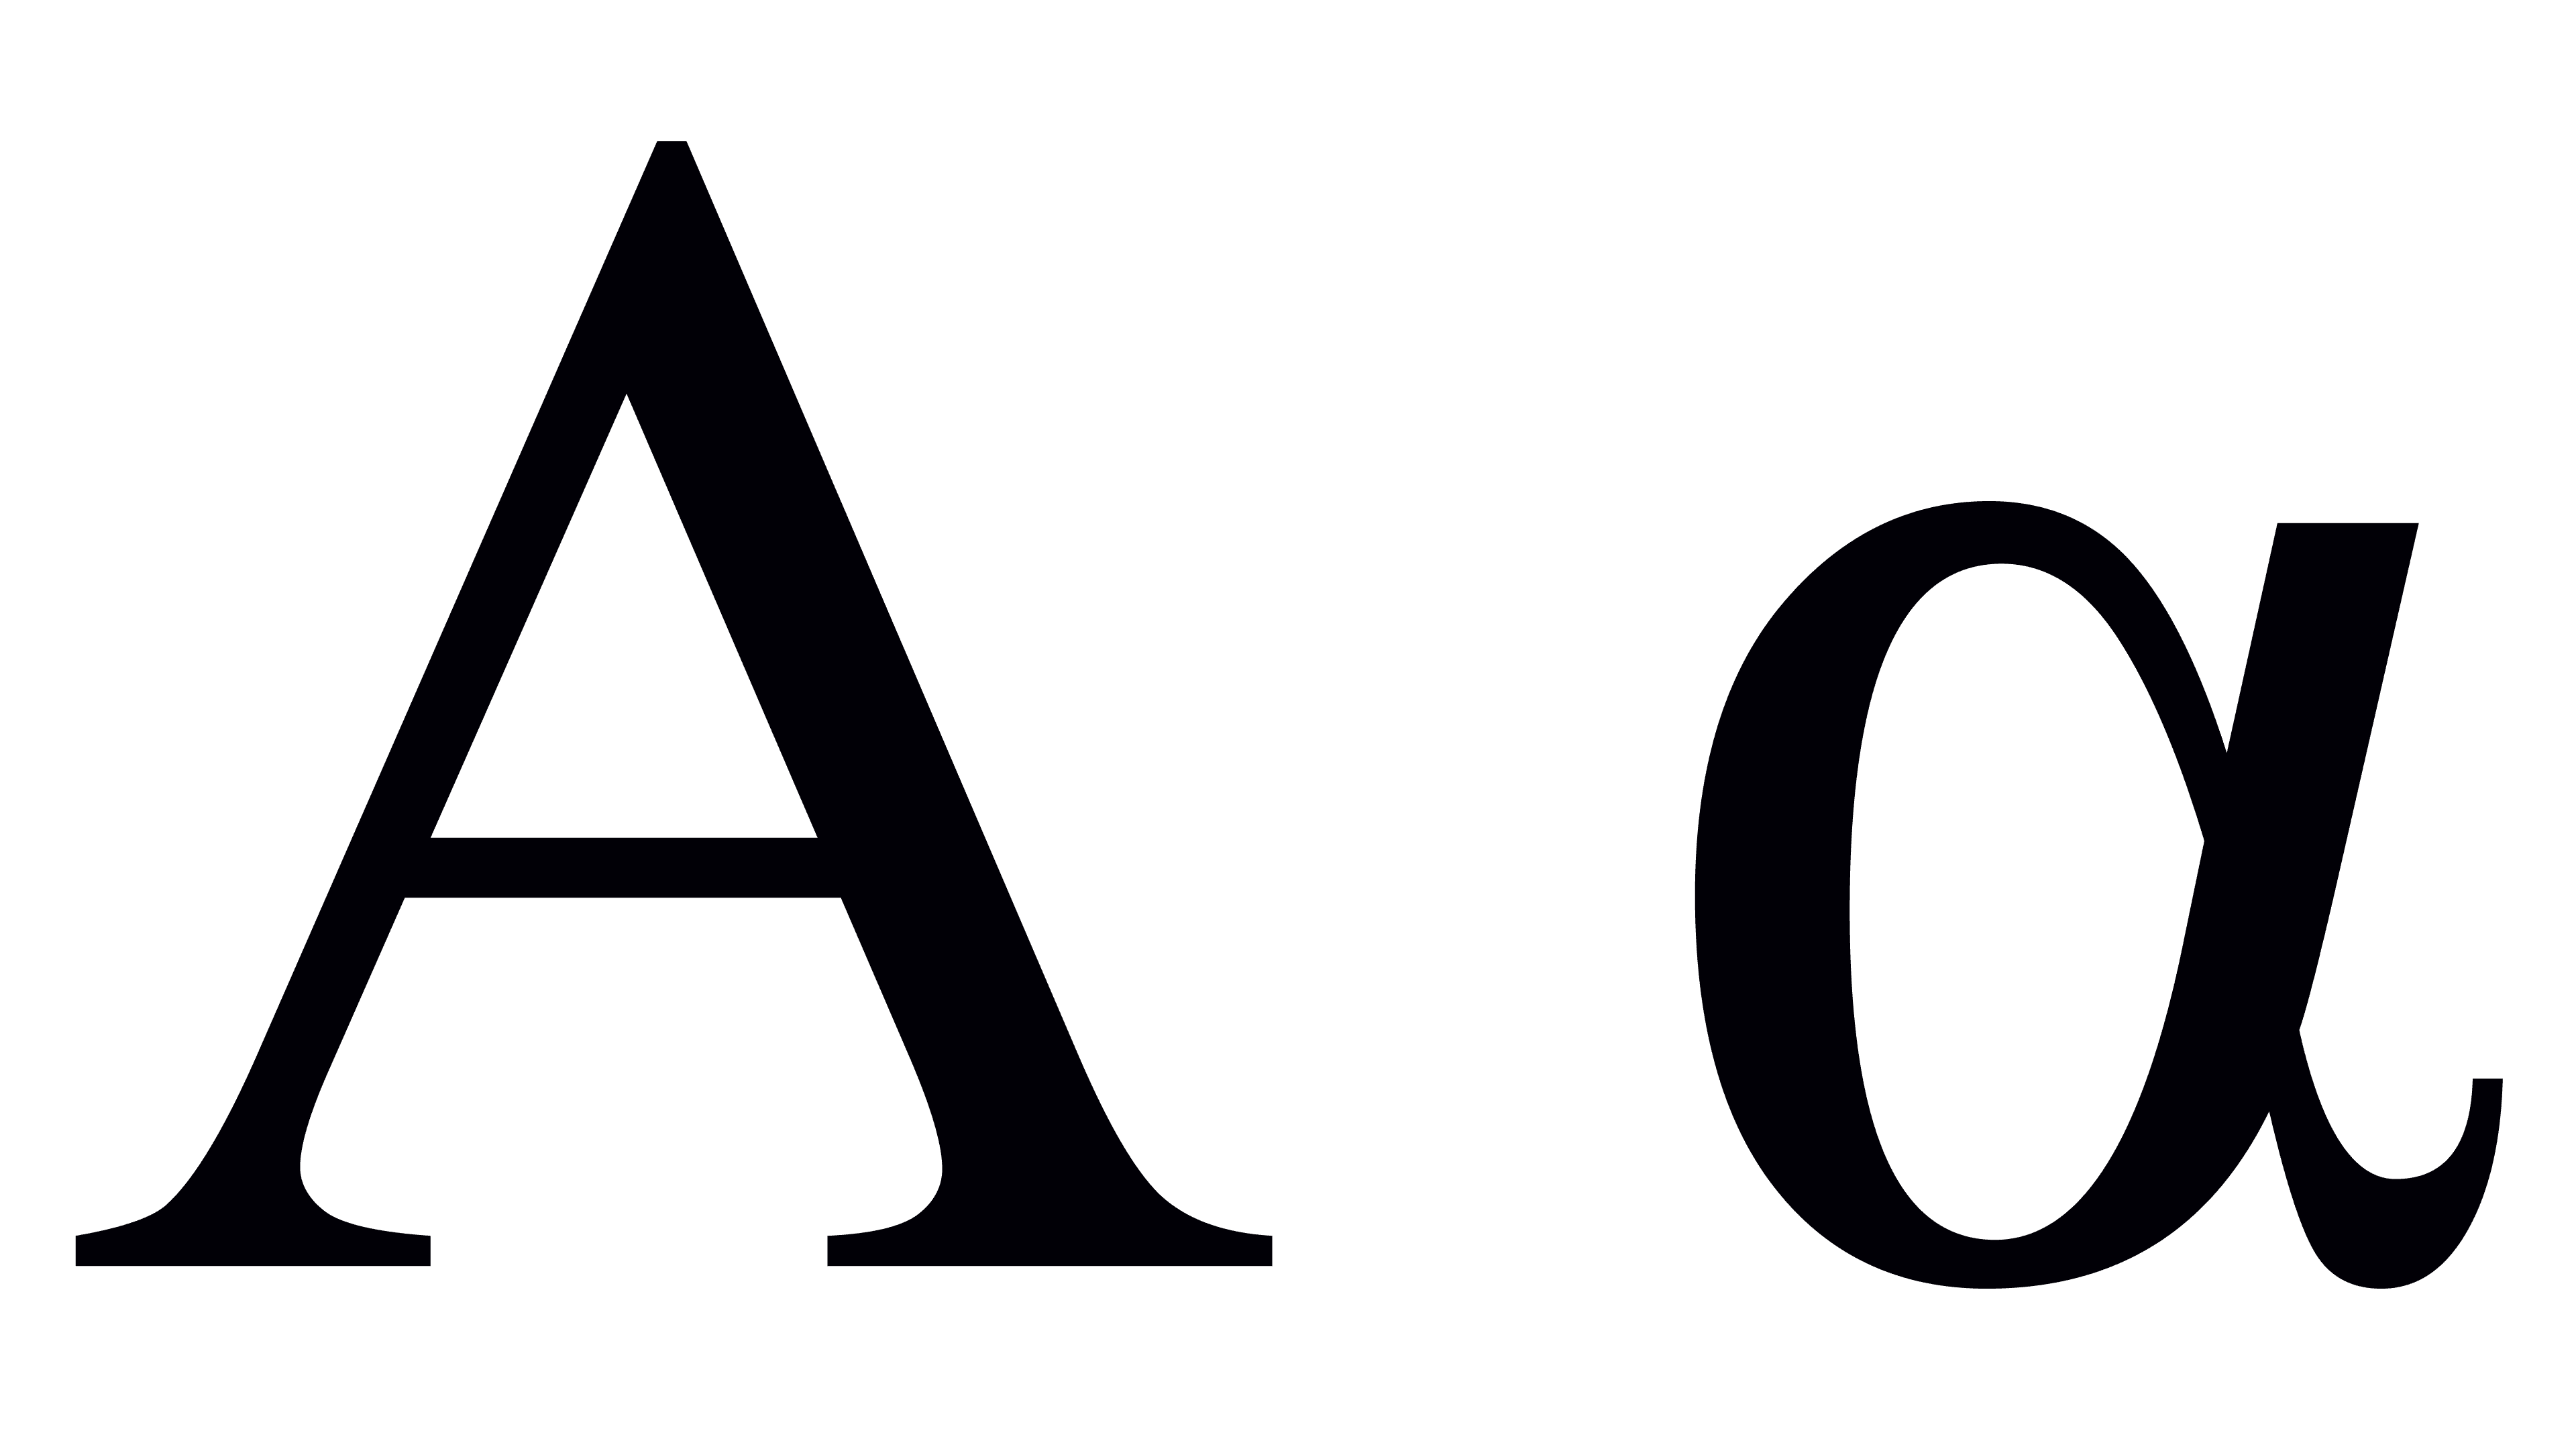 phoenicians alphabet a z